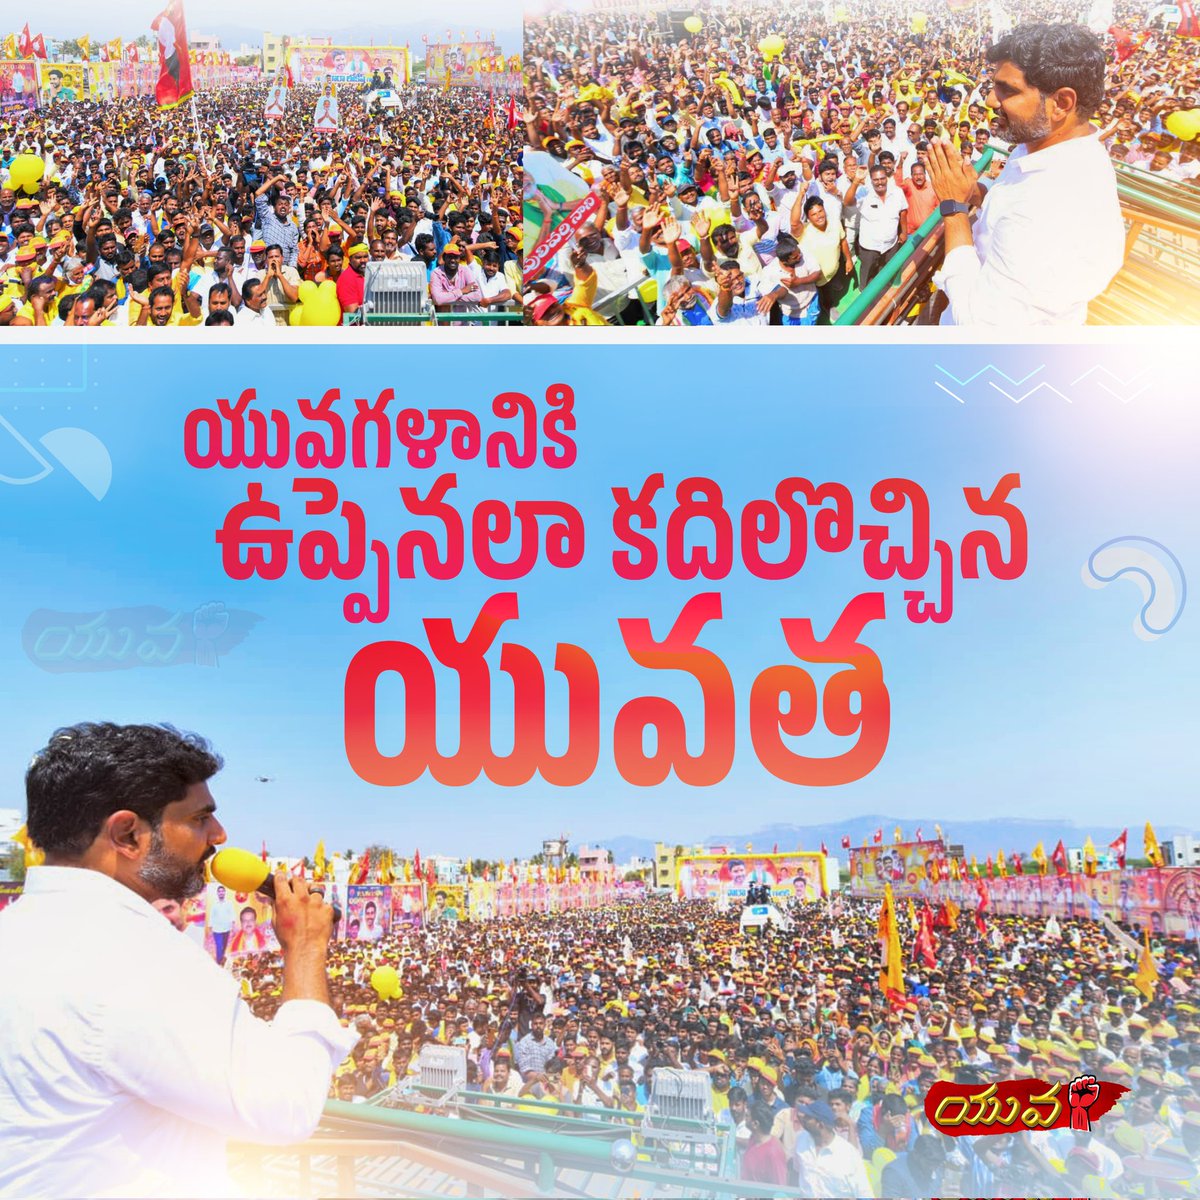 Yuvagalam Nara Lokesh is coming with the flag of Telugu Desam and people's wishes as his
agenda.
#NaraLokeshForMangalagiri